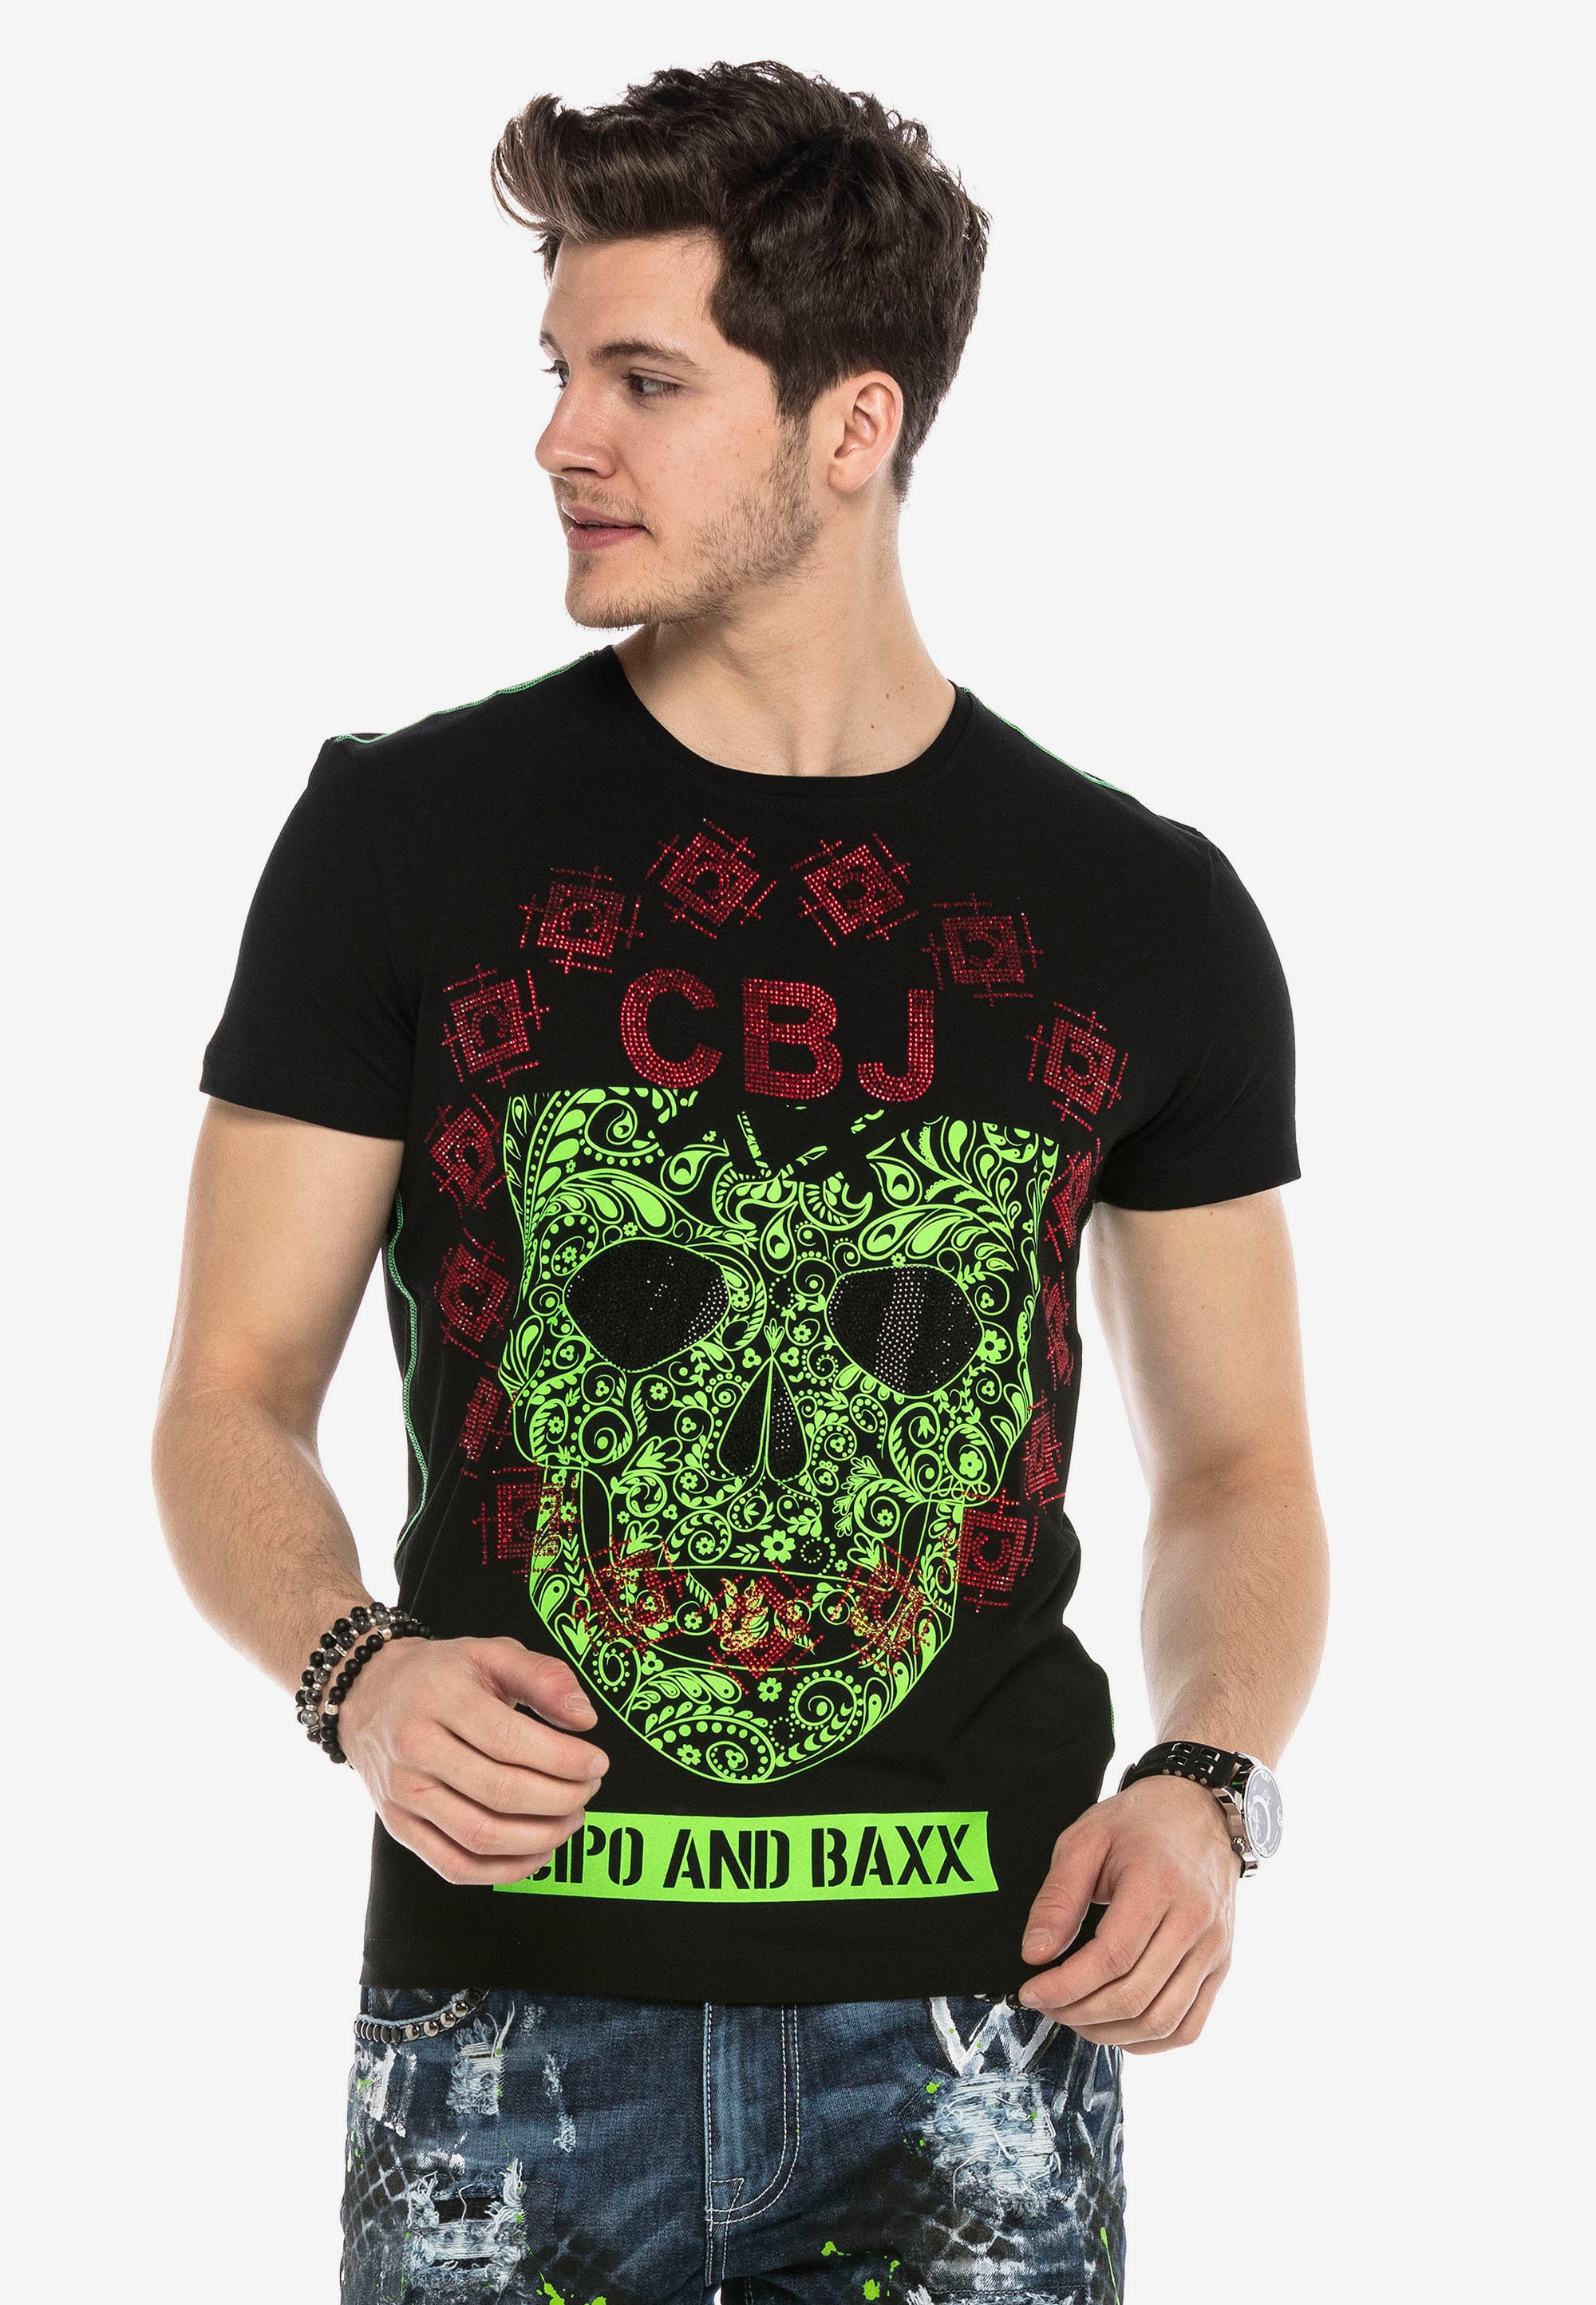 Cipo & Baxx T-Shirt, mit stylischem Totenkopfprint